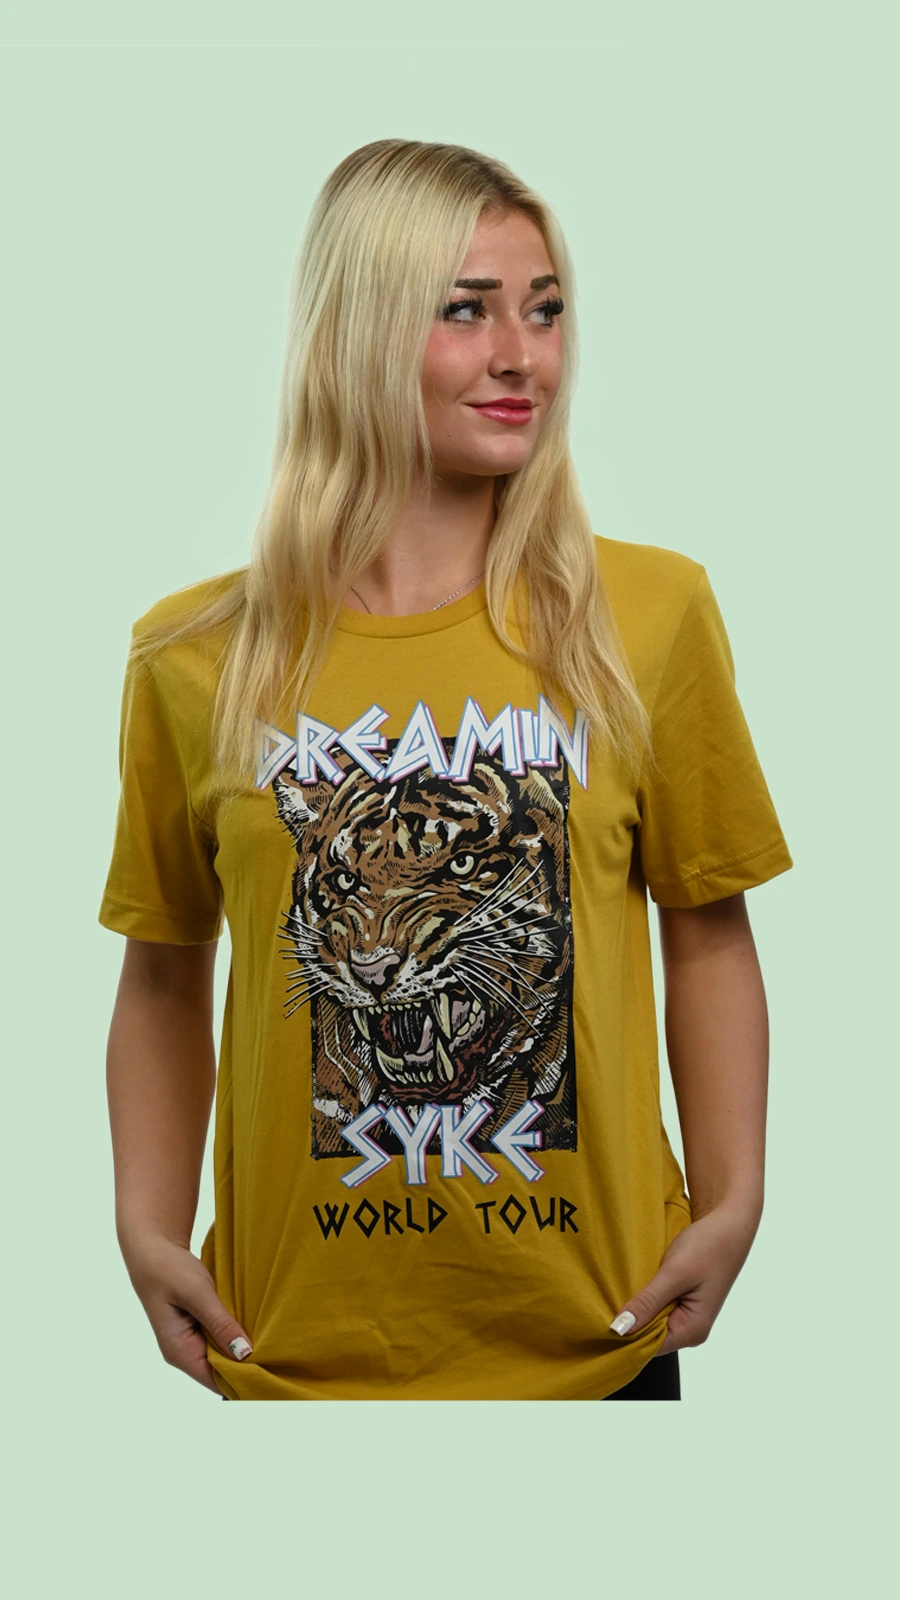 SYKE Dreamin World Tour T-Shirt Women T-Shirt